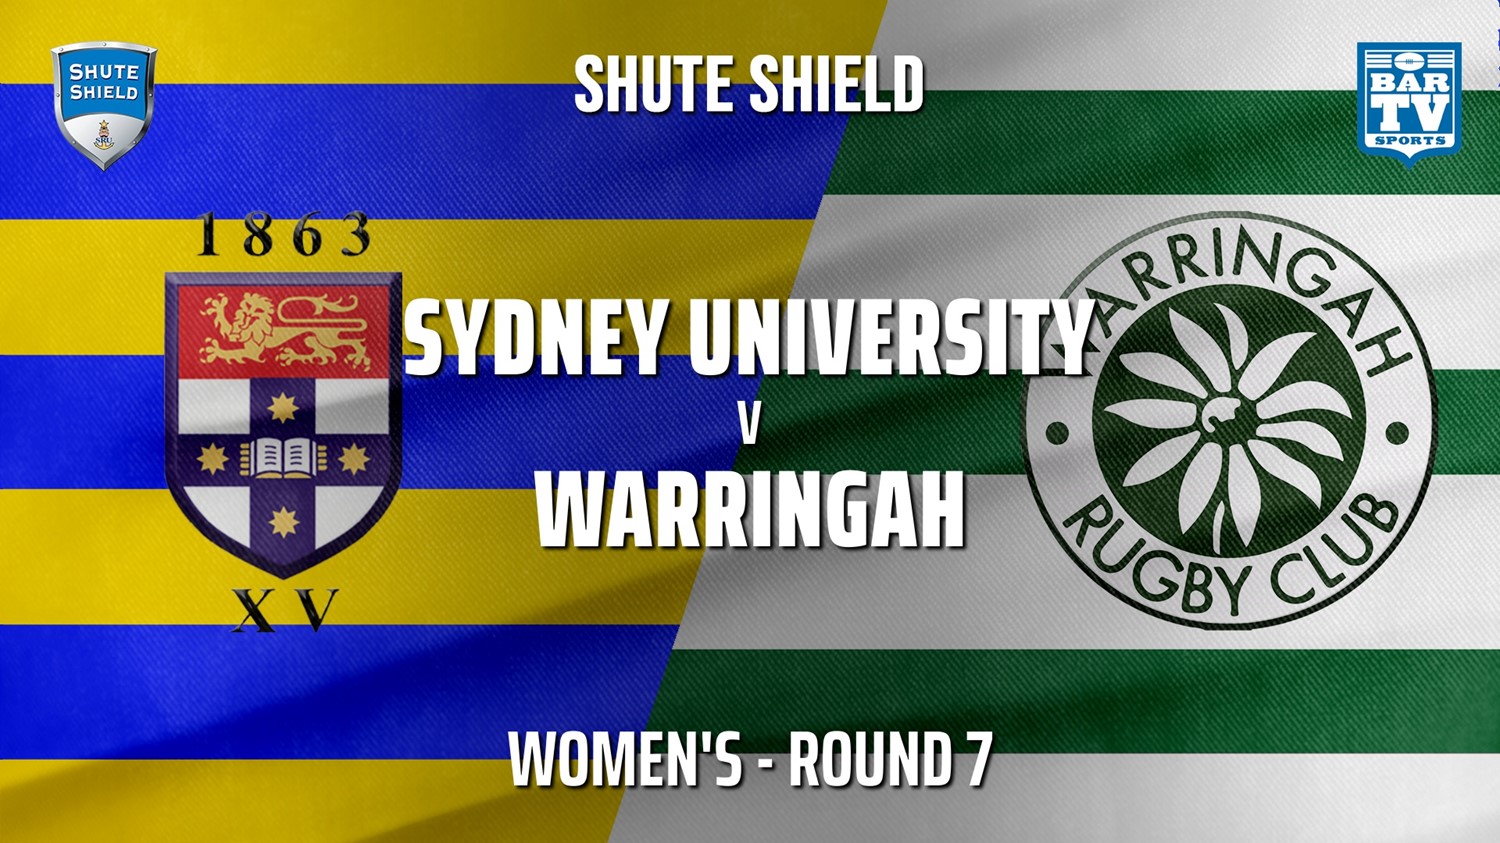 210522-Shute Shield Round 7 - Women's - Sydney University v Warringah Minigame Slate Image